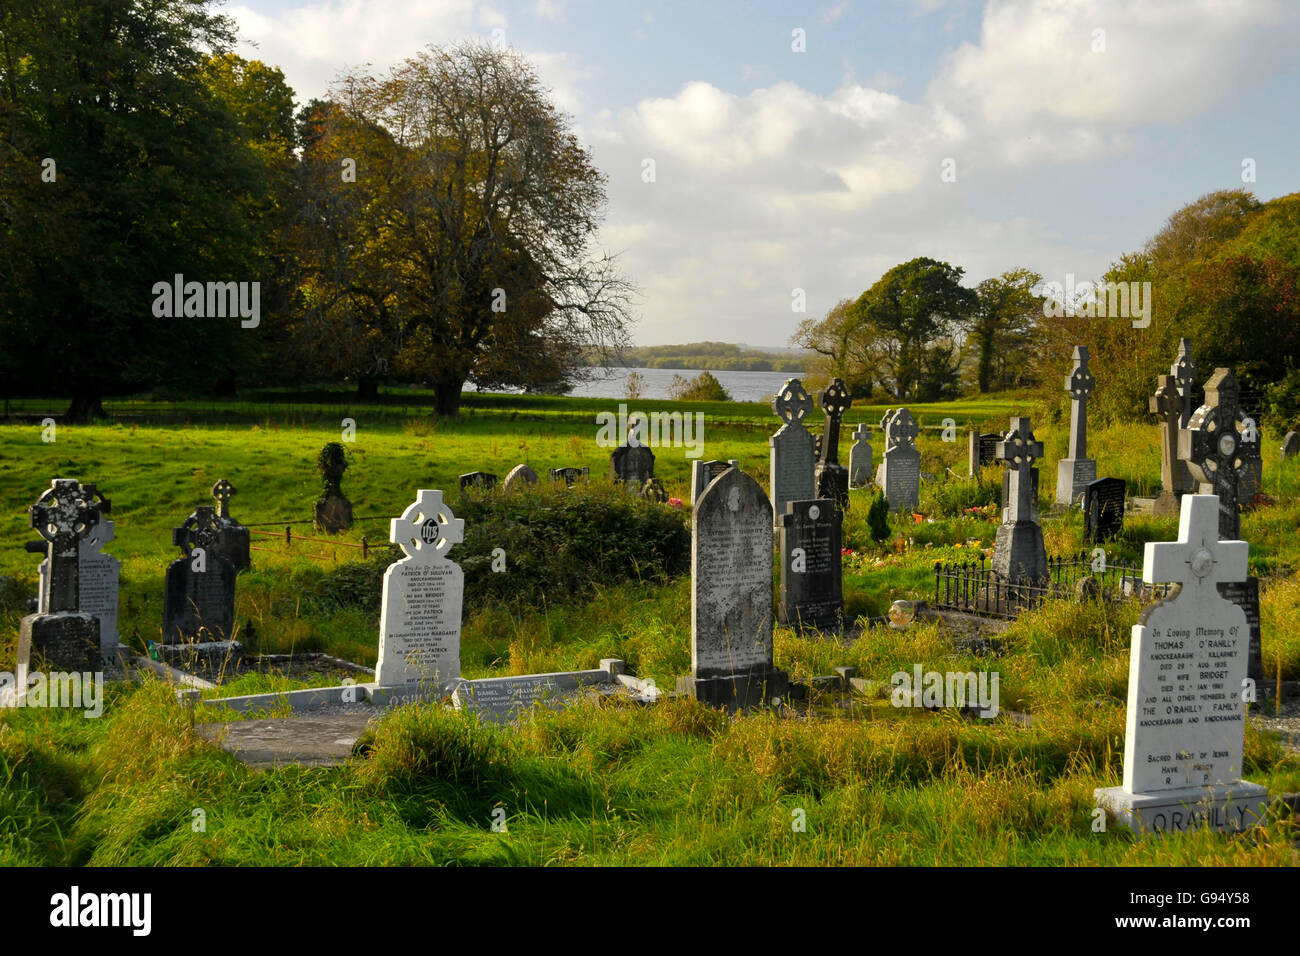 Cemetery, Muckross Abbey, Killarney National Park, Killarney, County Kerry, Ireland / burial ground, graveyard, churchyard Stock Photo